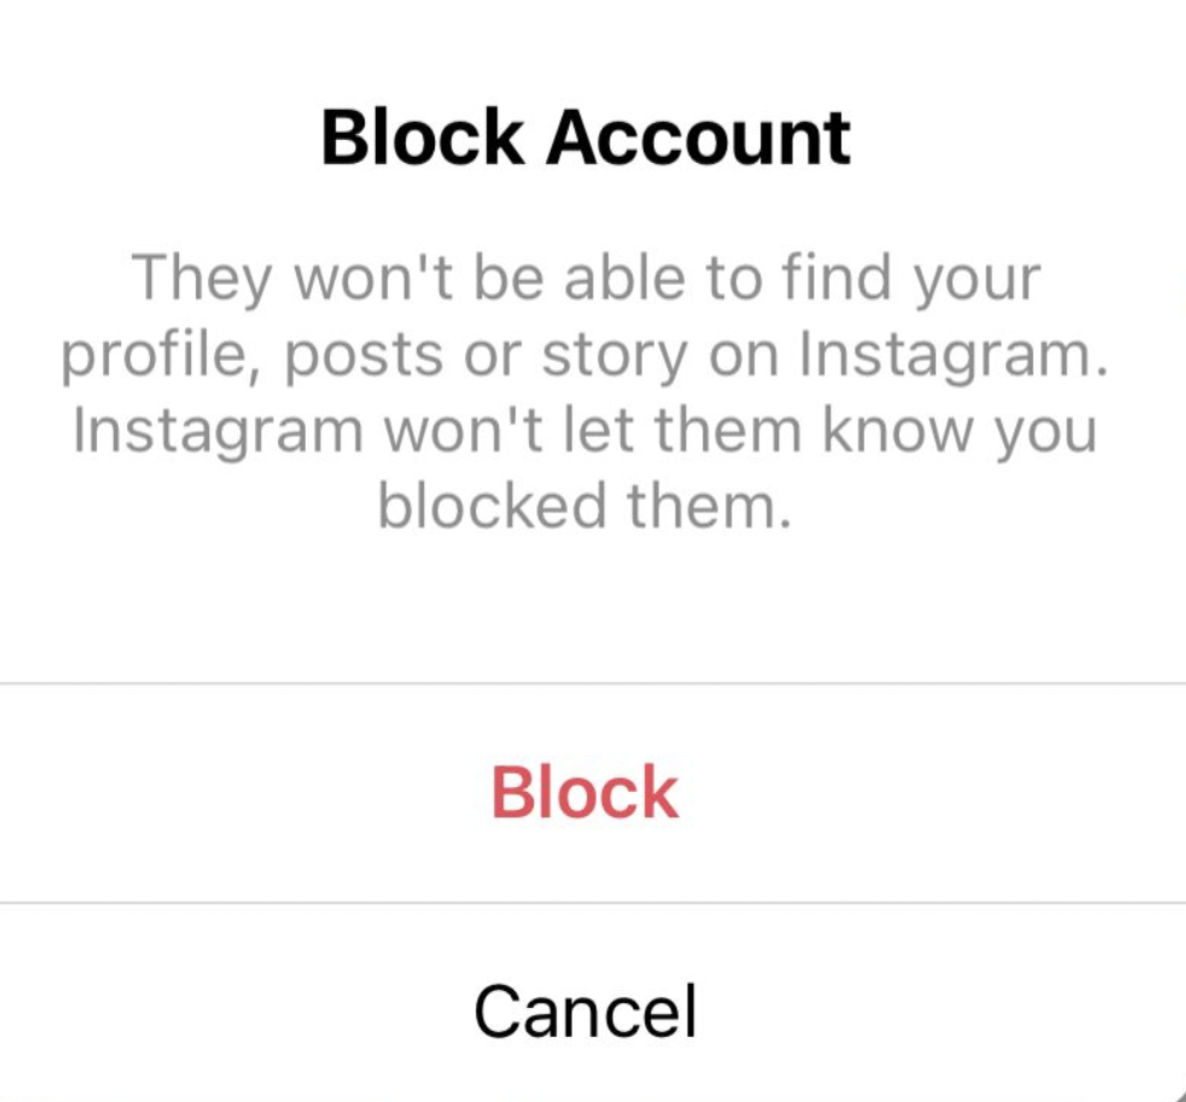 Block users on Instagram